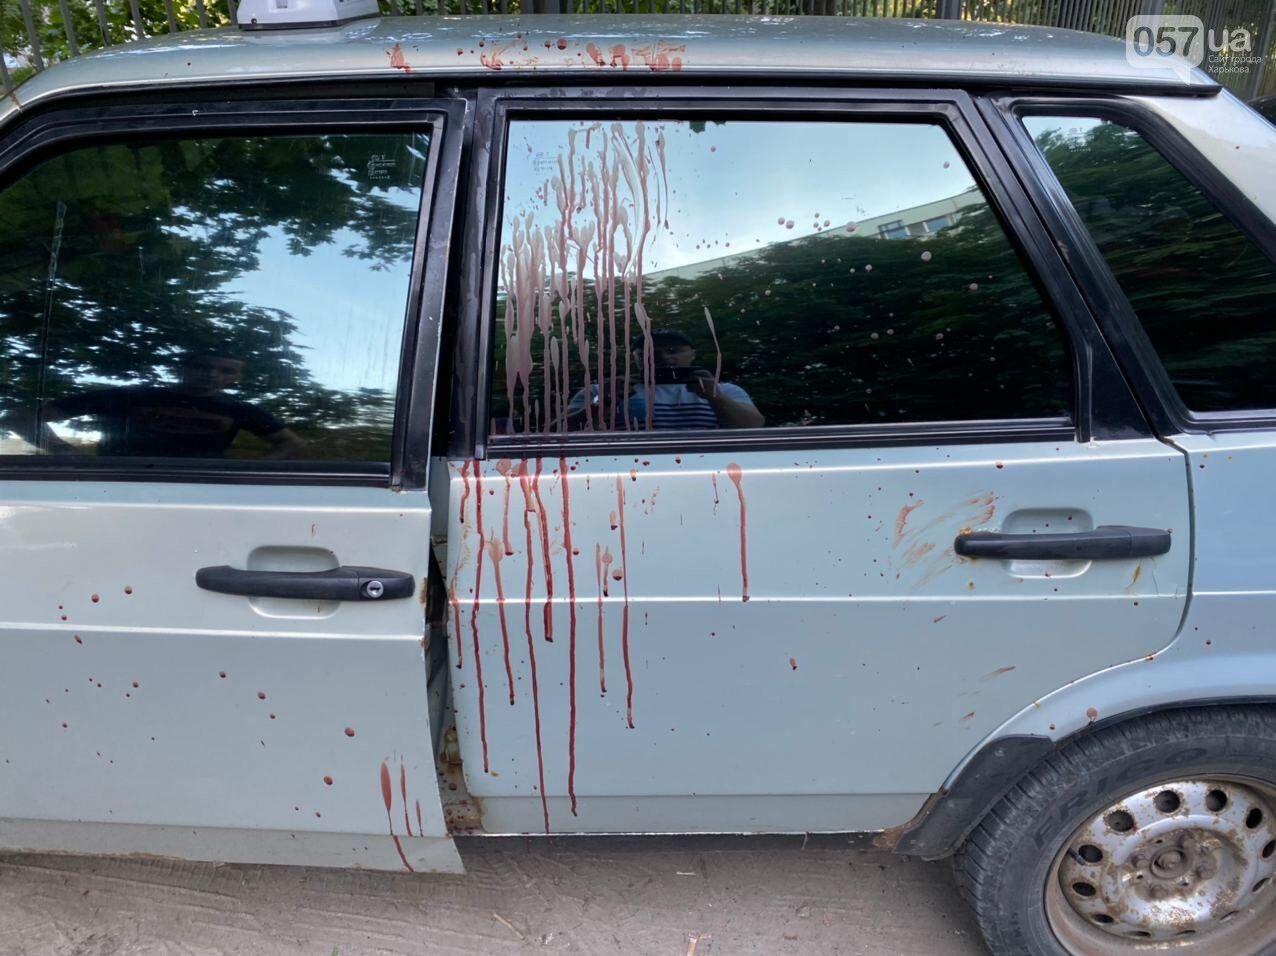 На машине видно потеки крови.